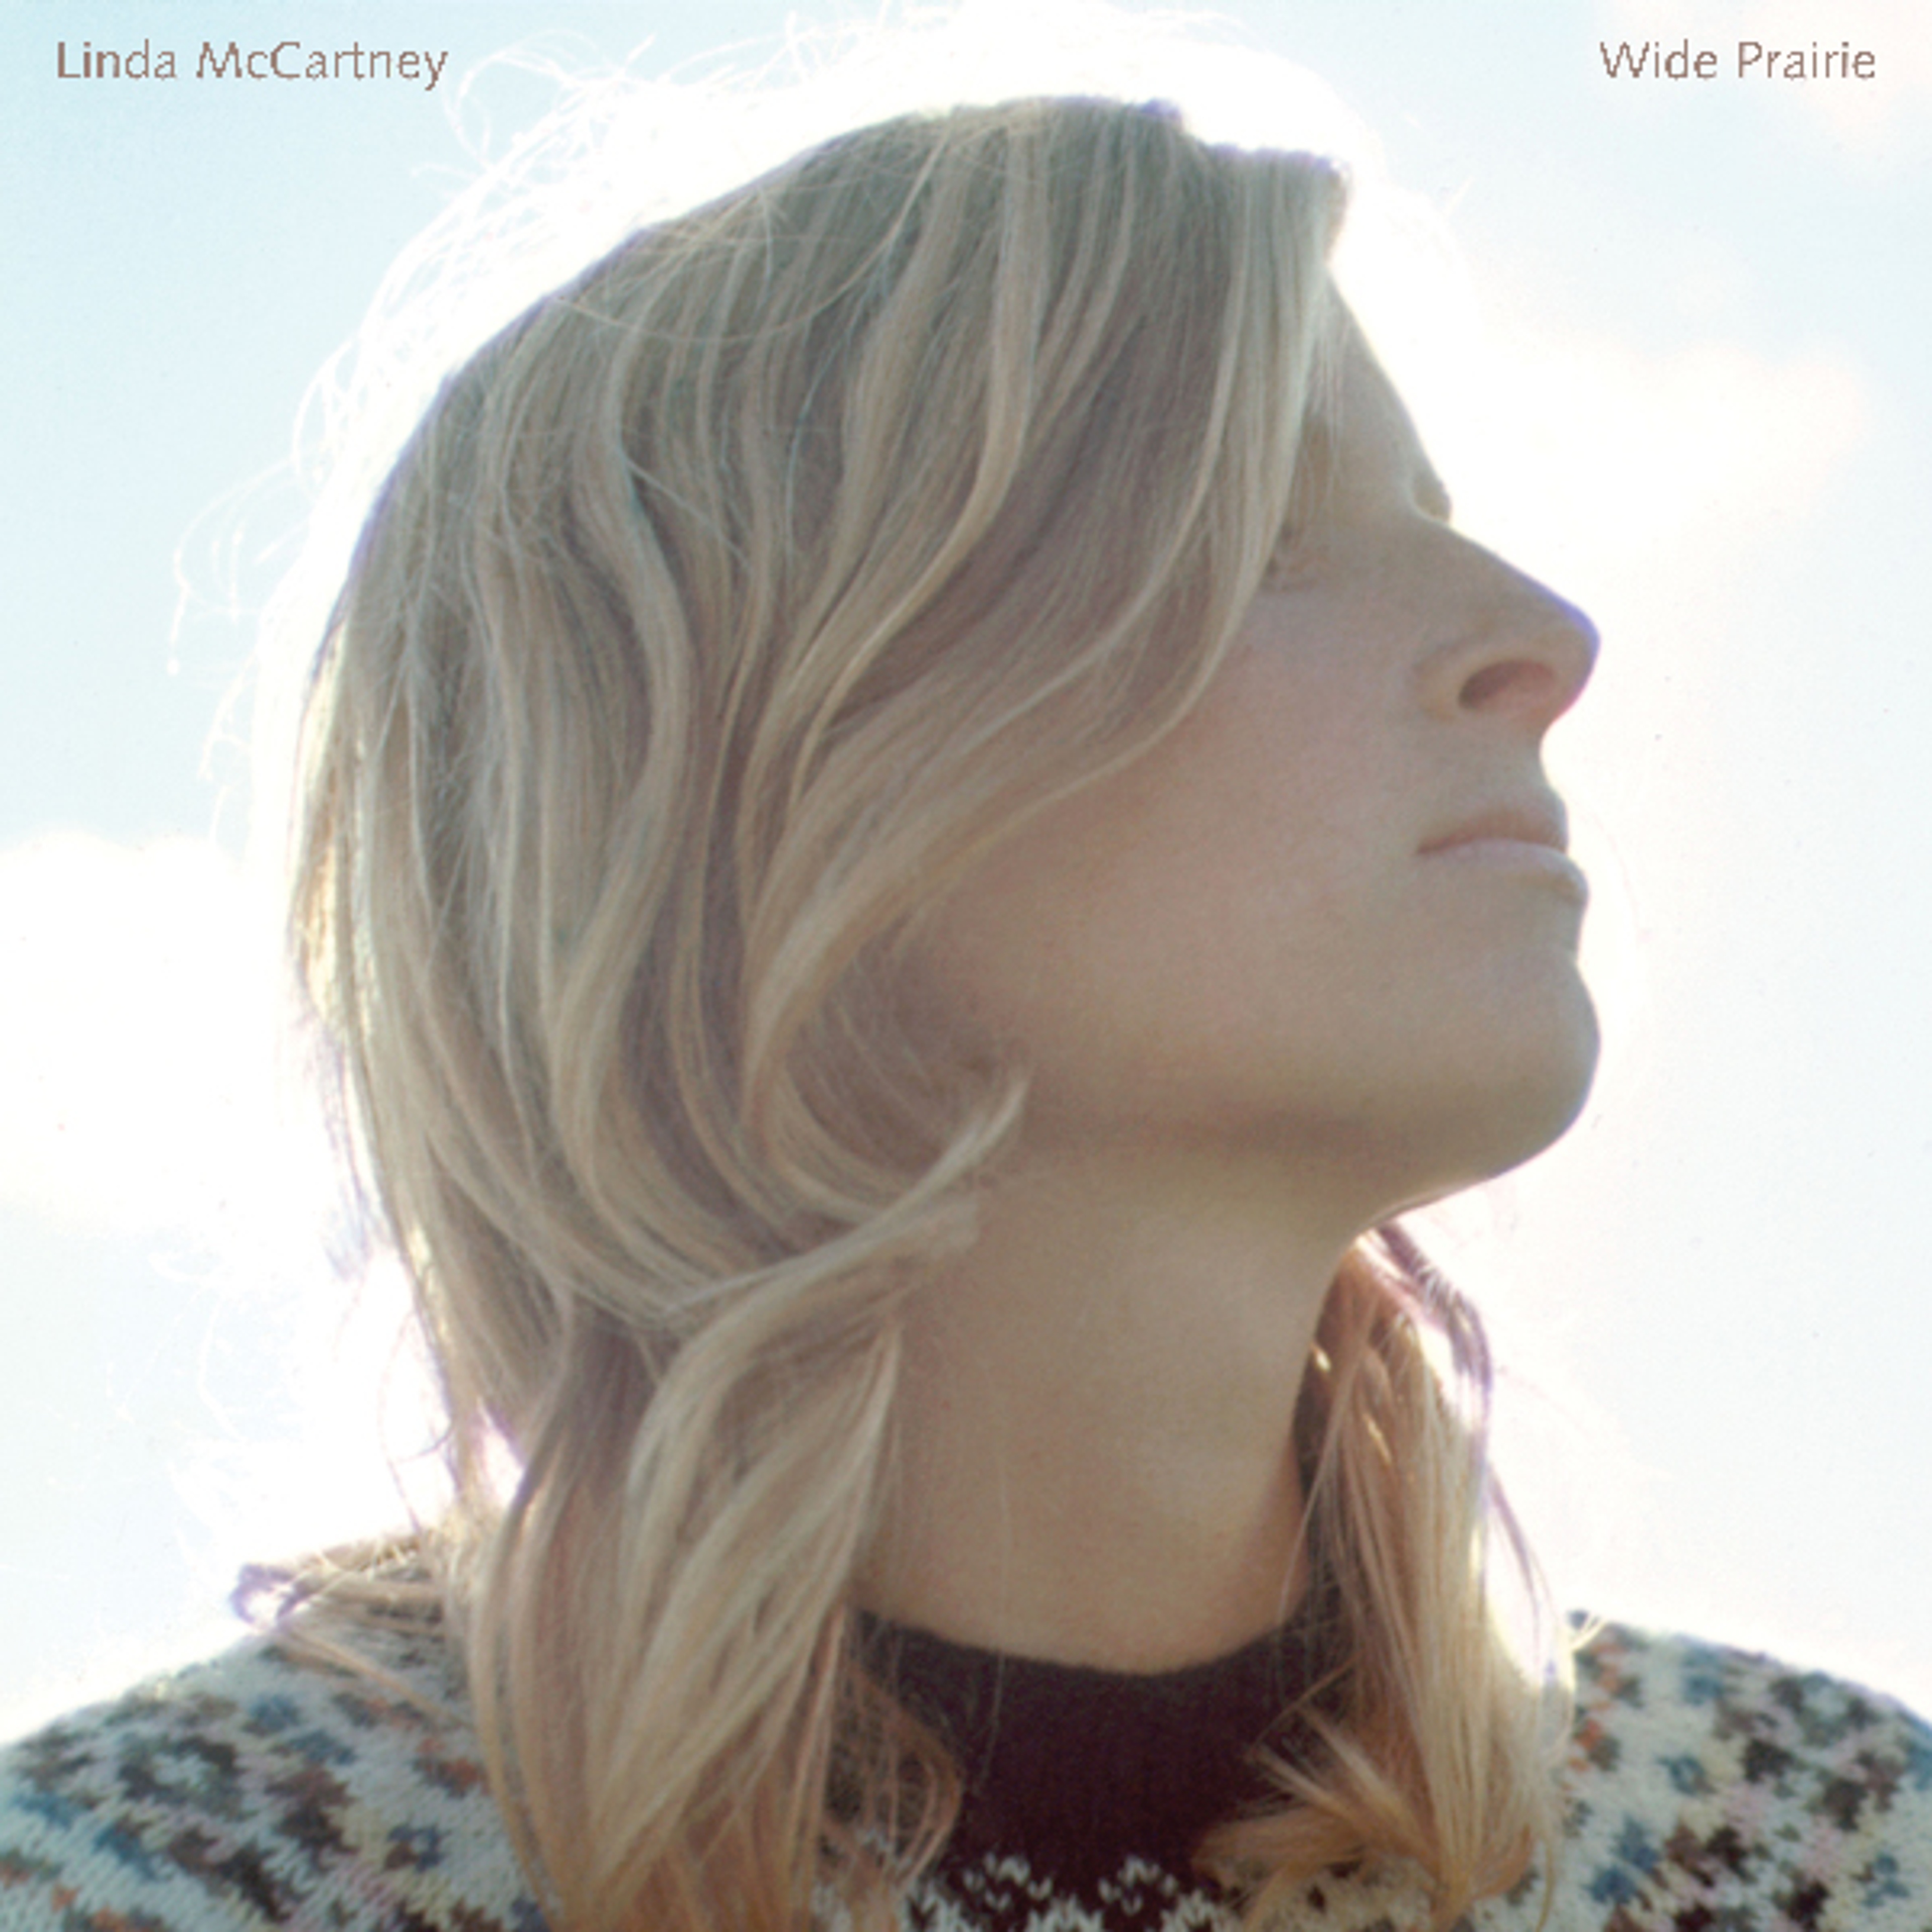 Photo of Linda McCartney 'Wide Prairie' album artwork